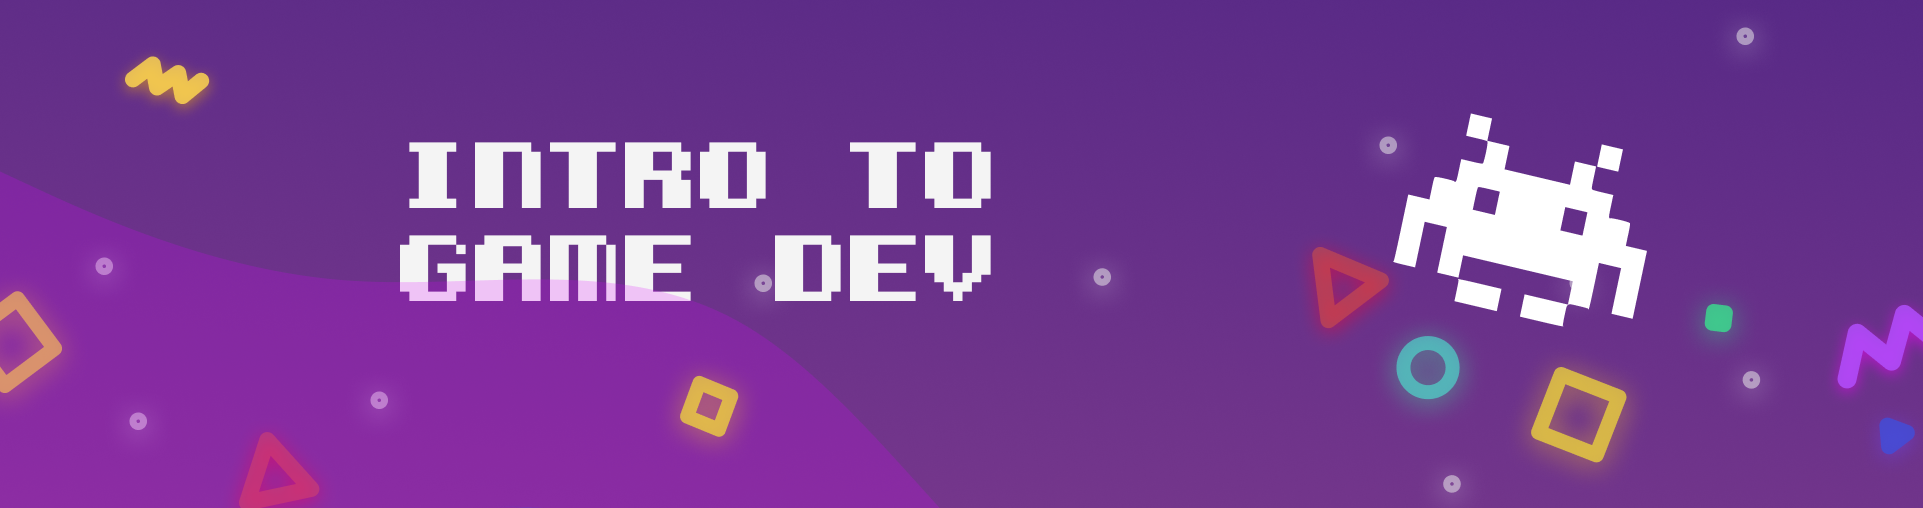 Intro to Game Dev by john.ng